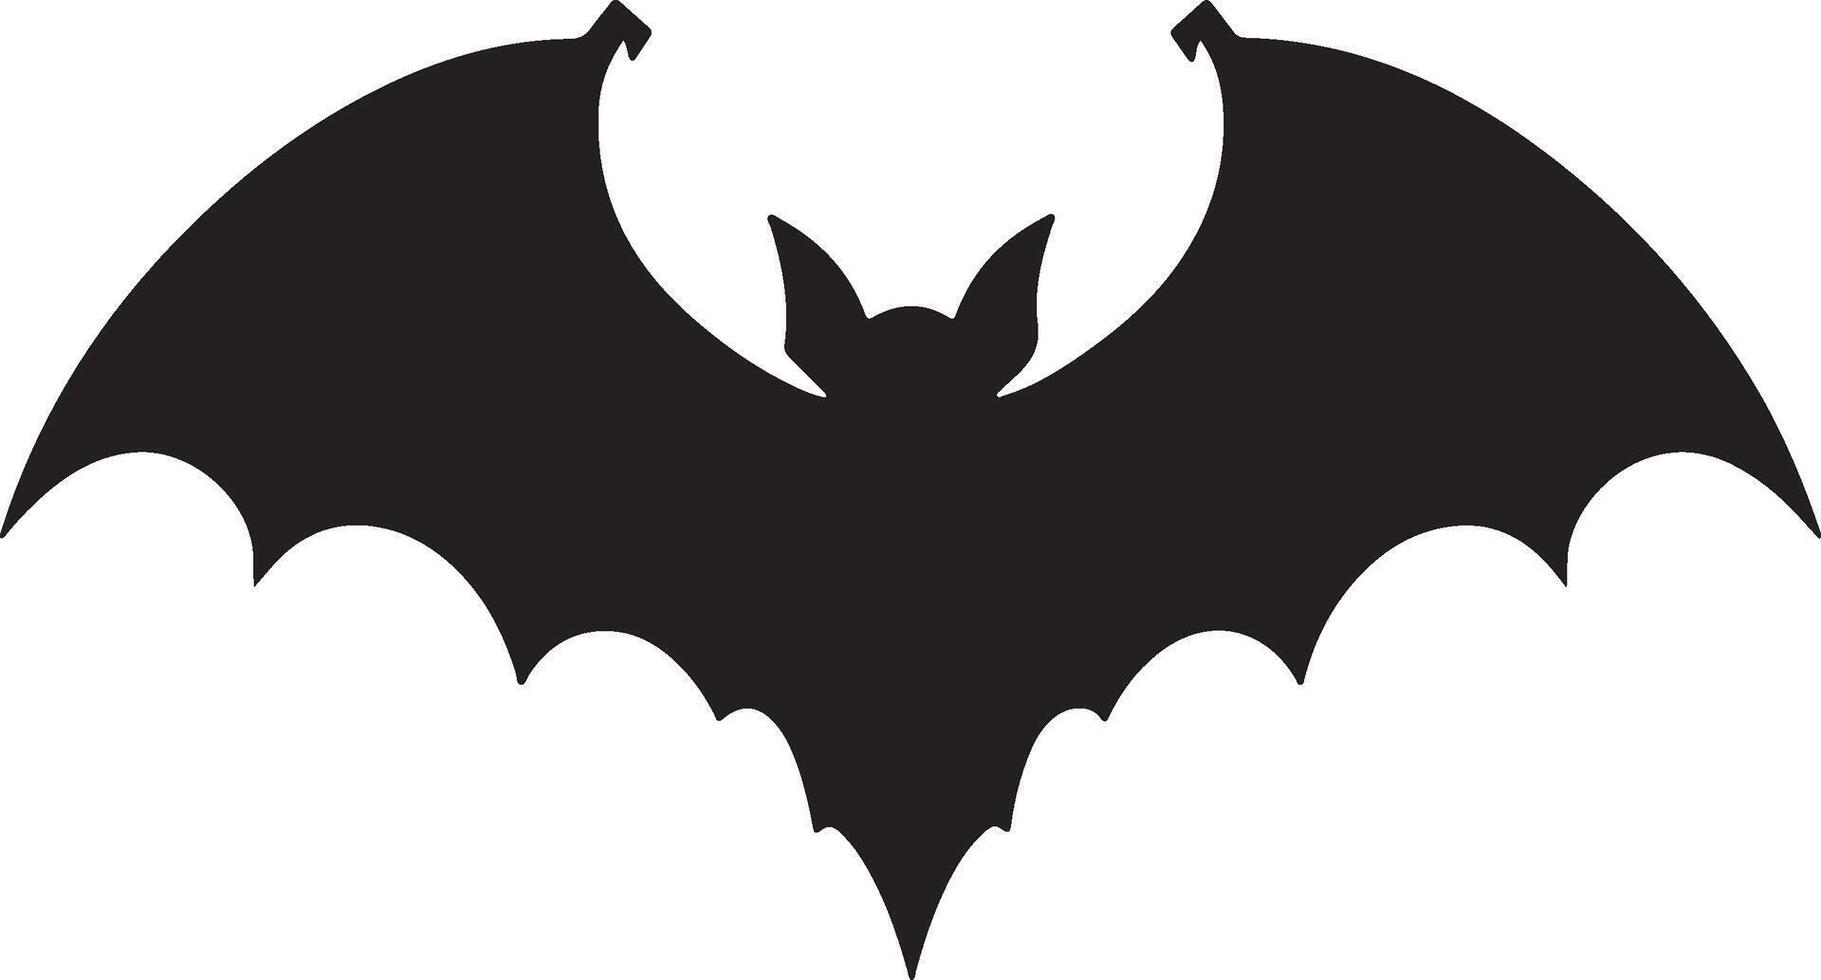 Bat Silhouette Vector Illustration White Background